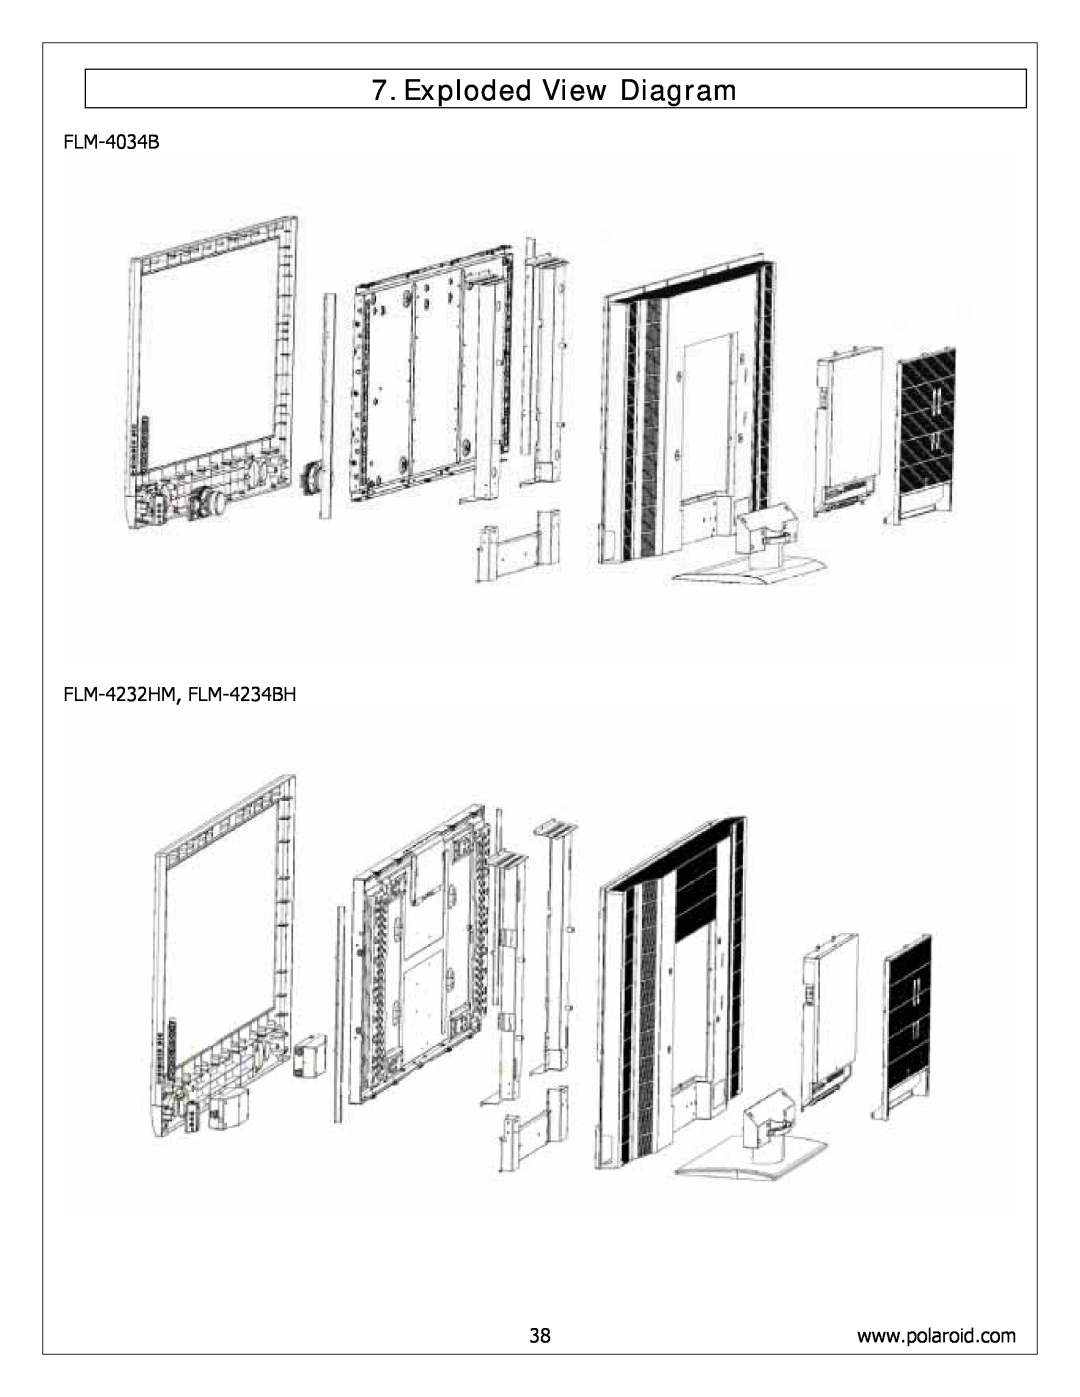 Polaroid service manual Exploded View Diagram, FLM-4034B FLM-4232HM, FLM-4234BH 